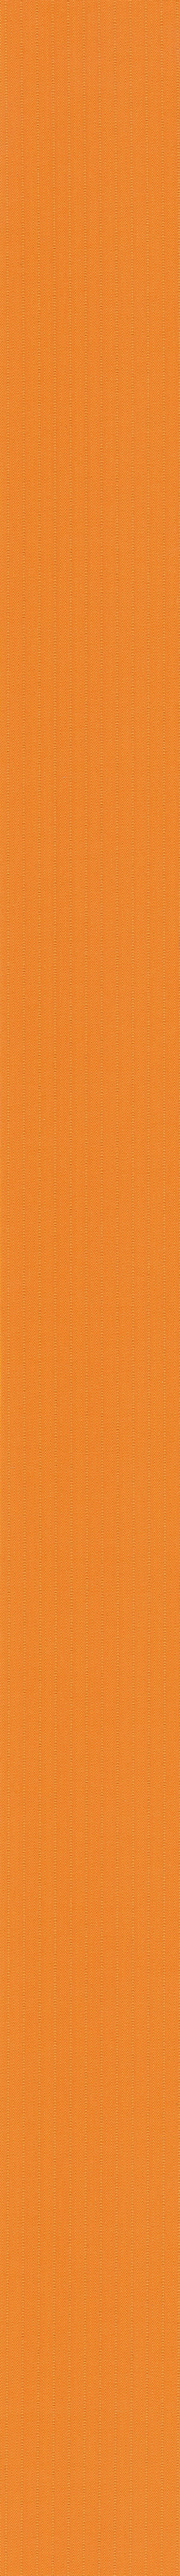 Ткань-Лайн-апельсин